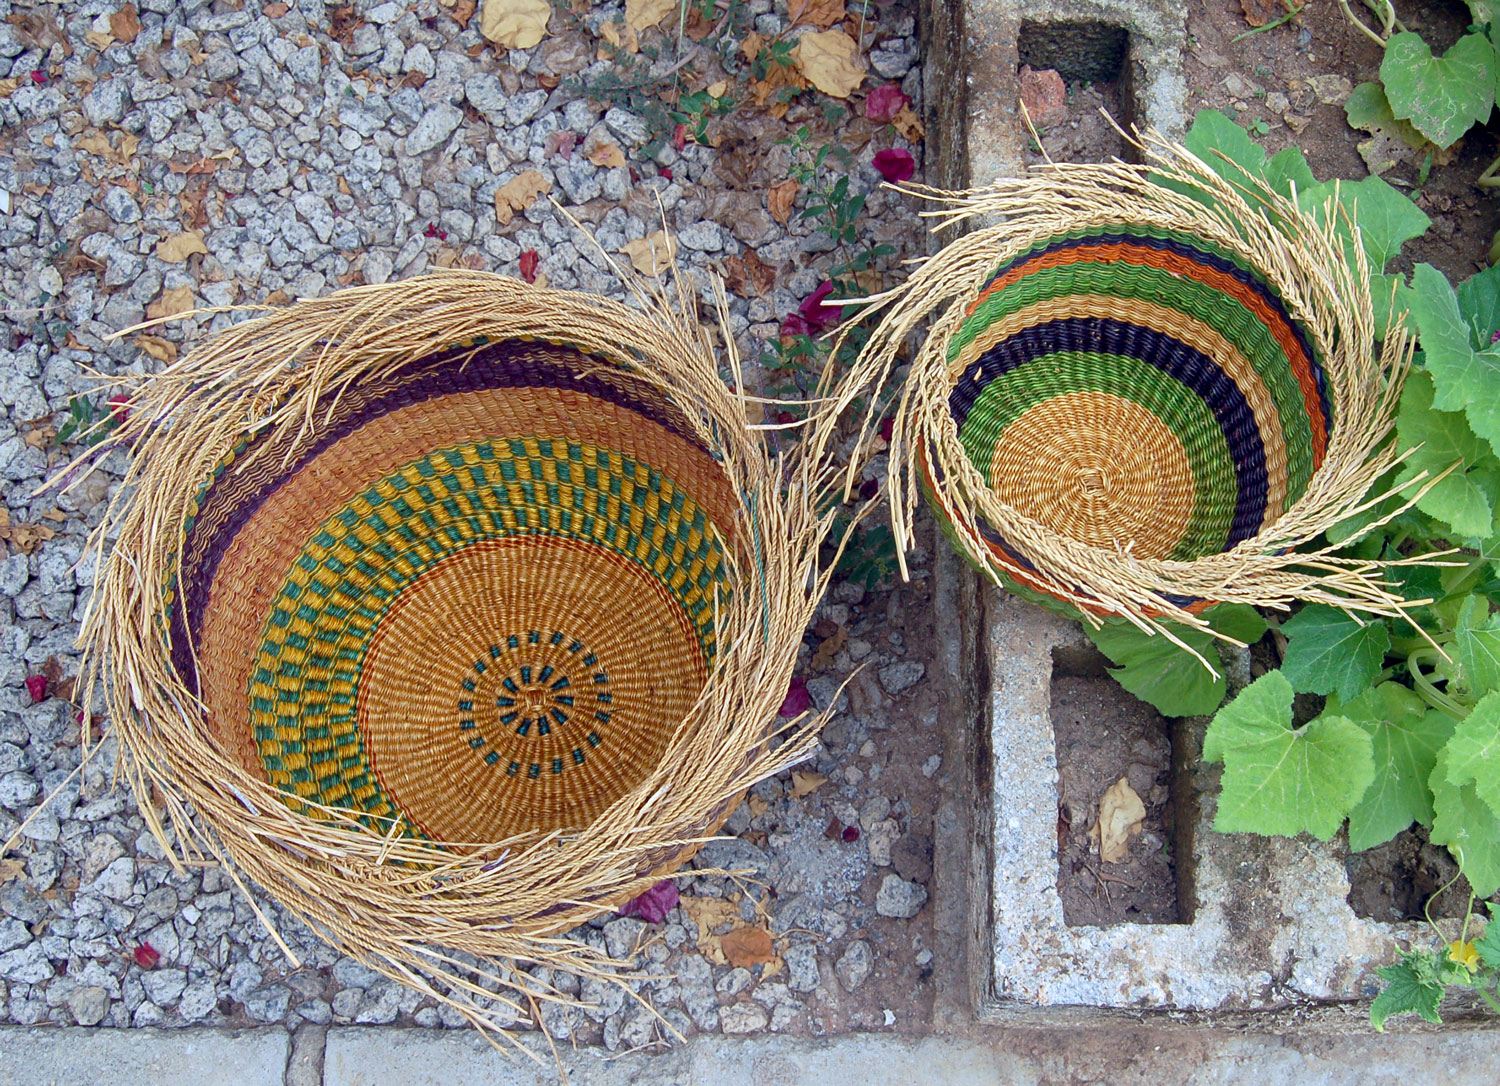 AfriMod Bird’s Nest Planter Basket Set #1